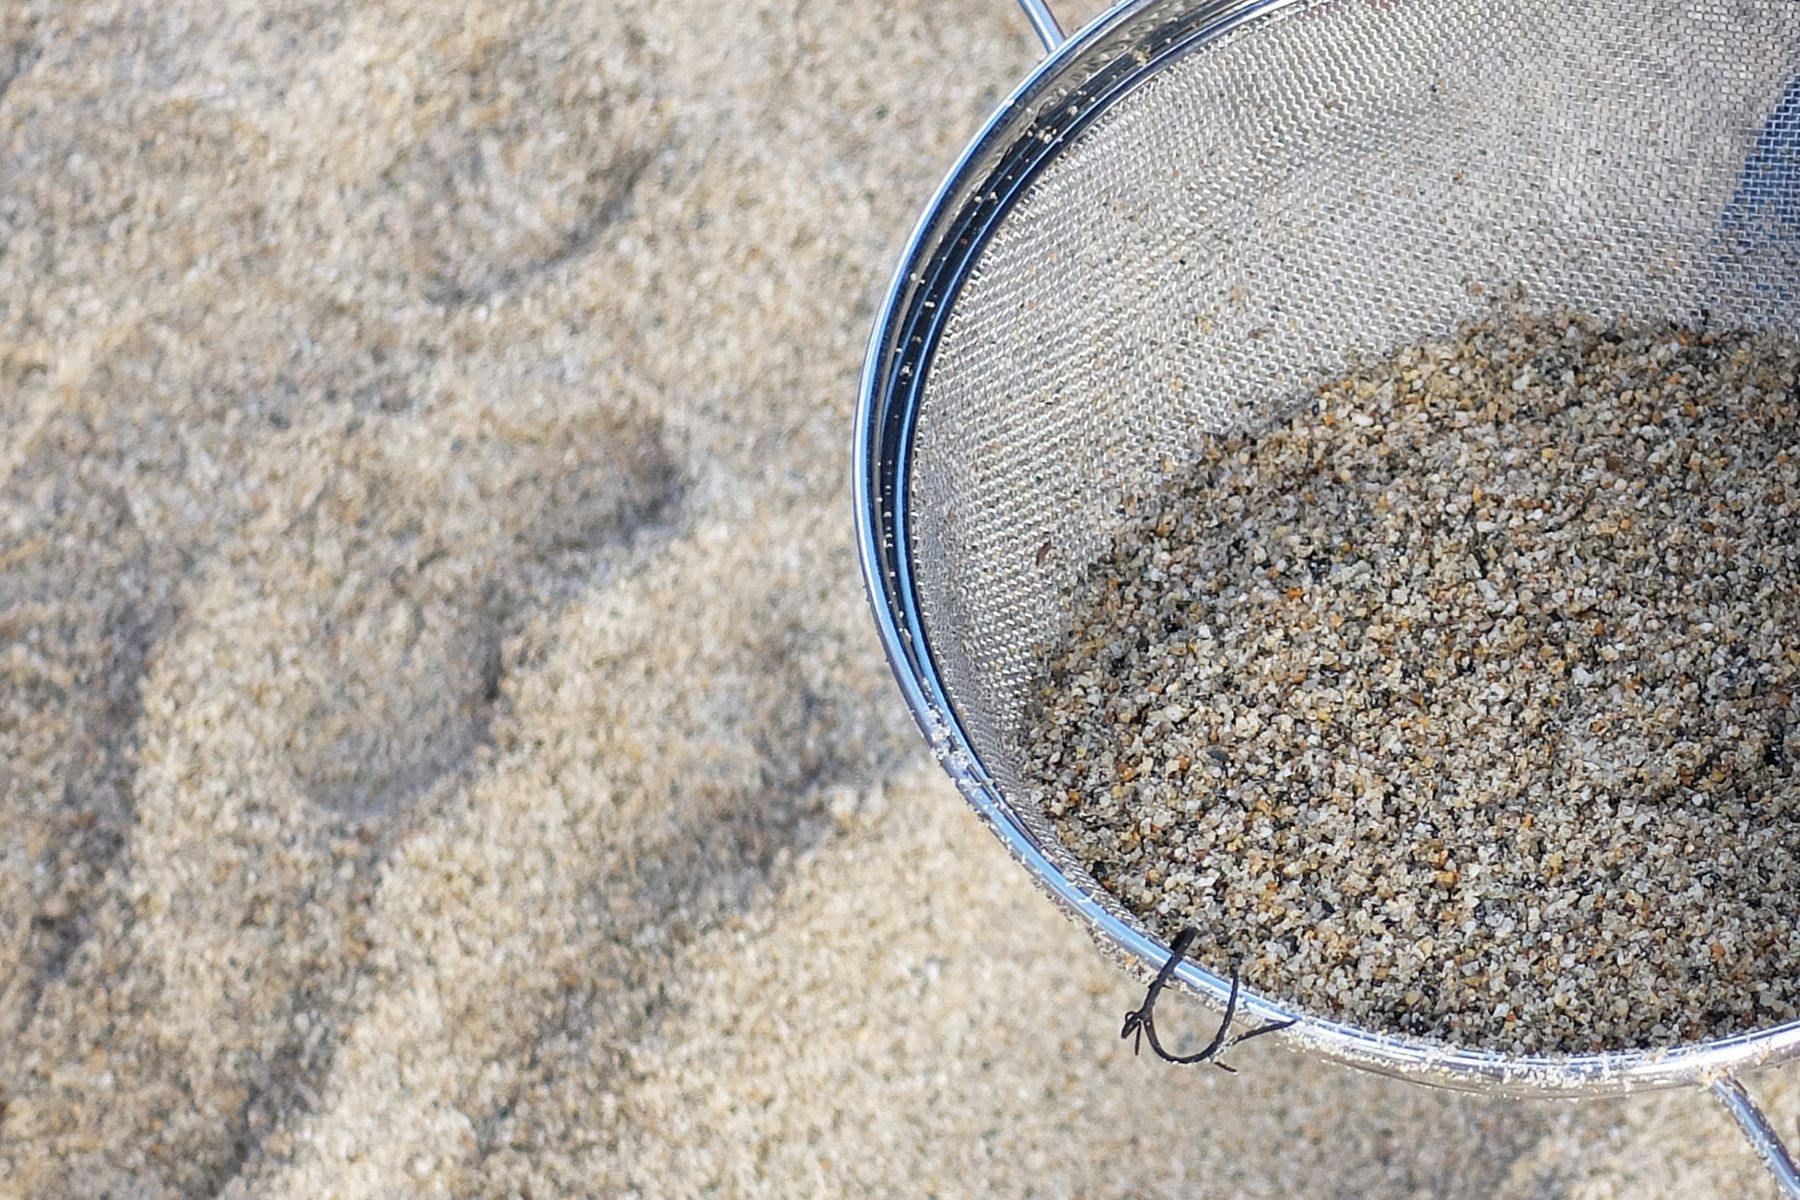 seiving sand for microplastics